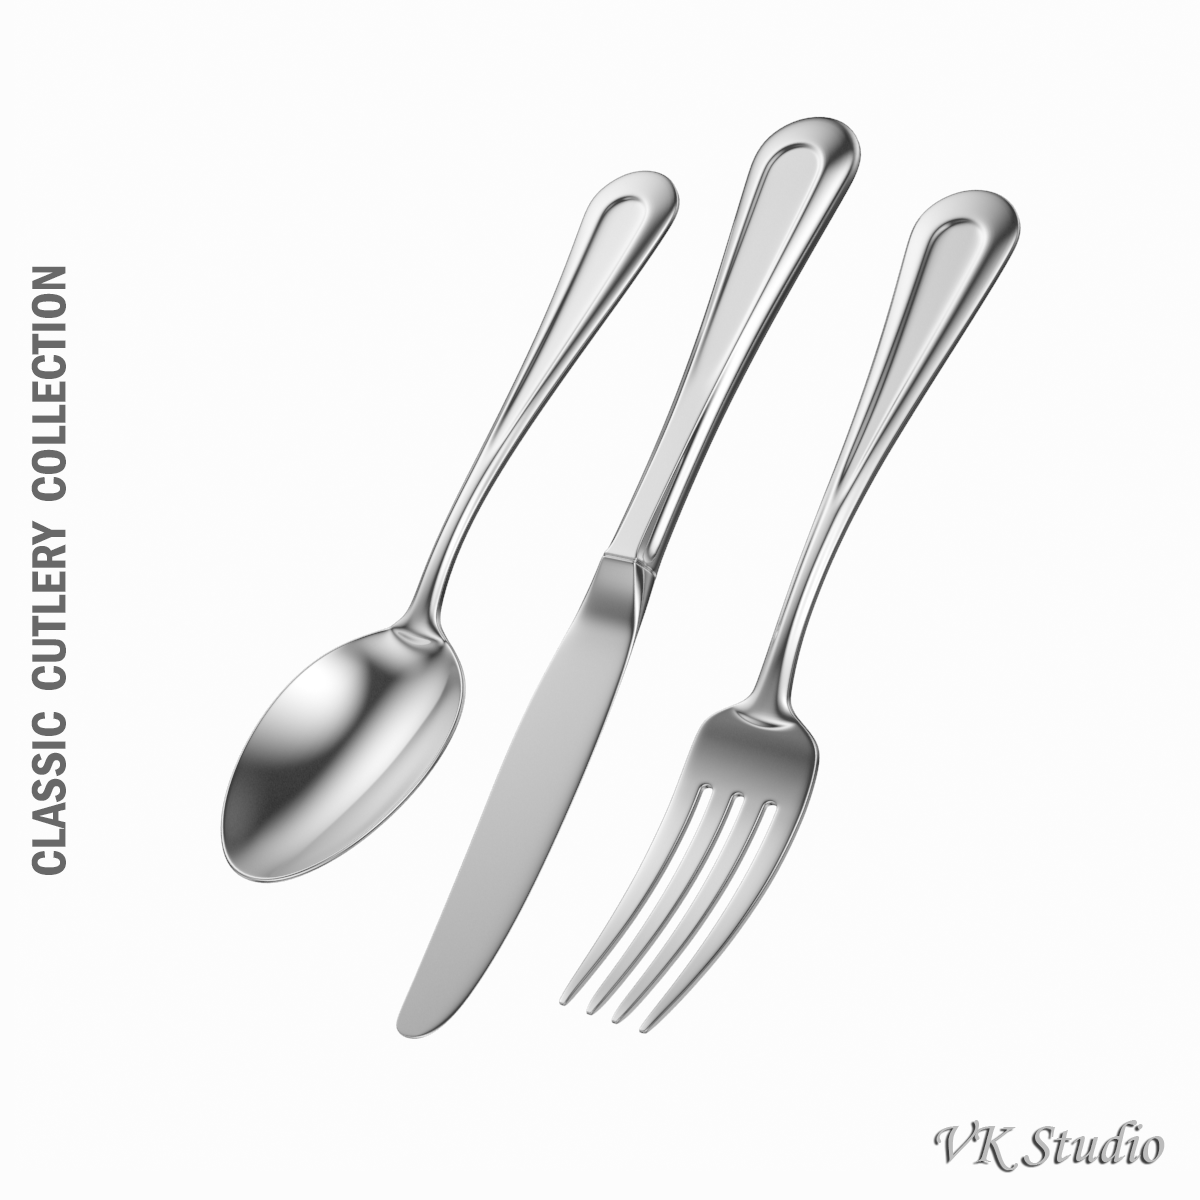 table dinner knife, fork, spoon classic cutlery 3d model 3ds max fbx c4d ma mb  obj 284624